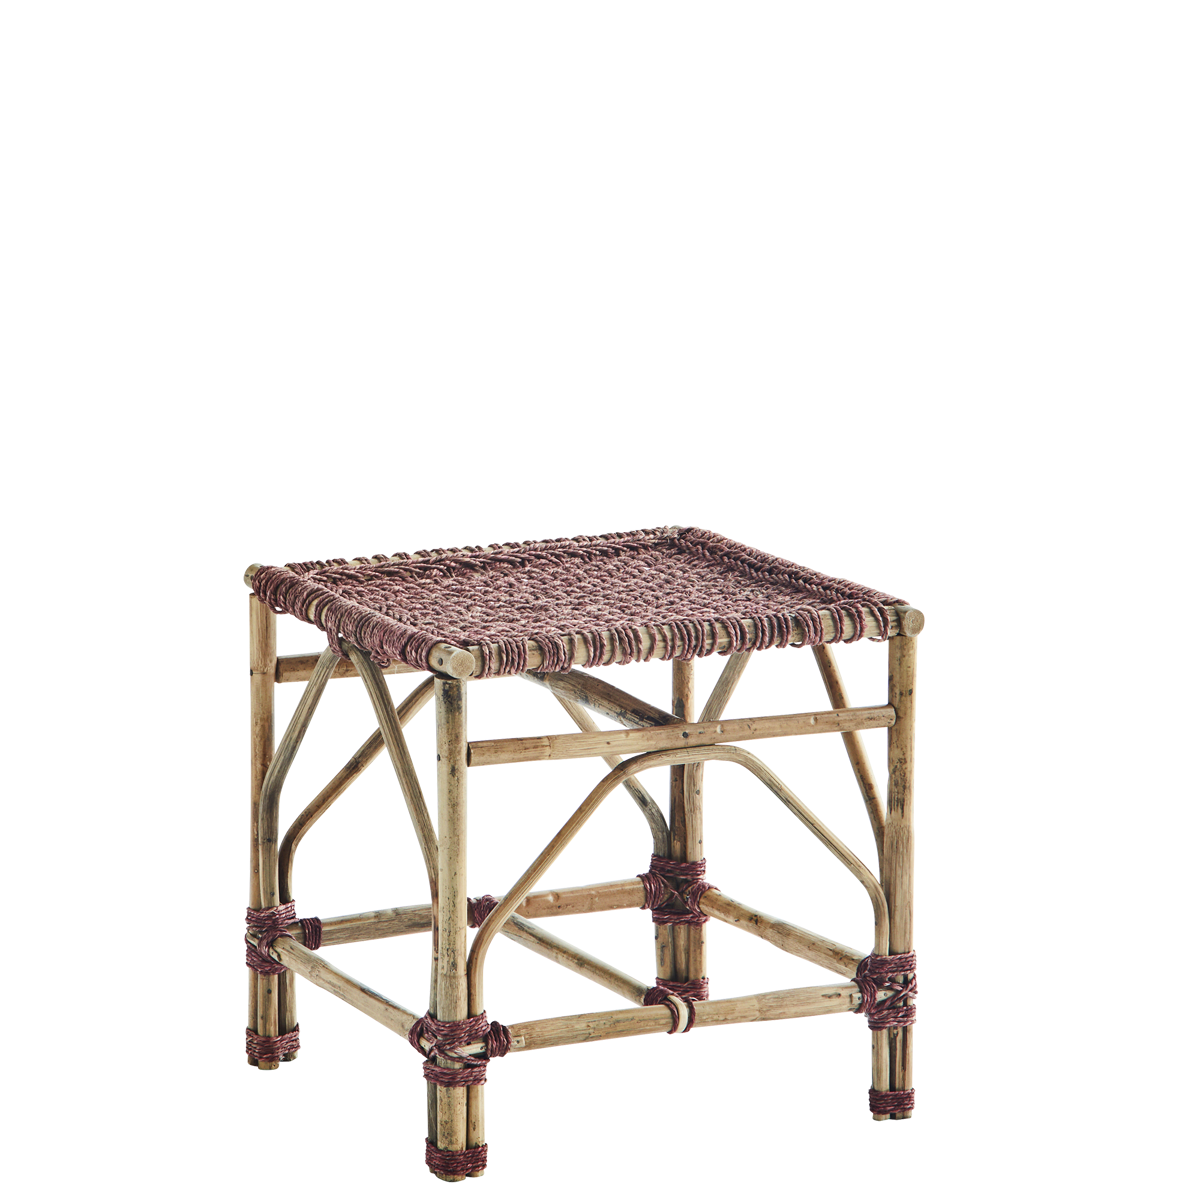 Bamboo stool w/ weaving